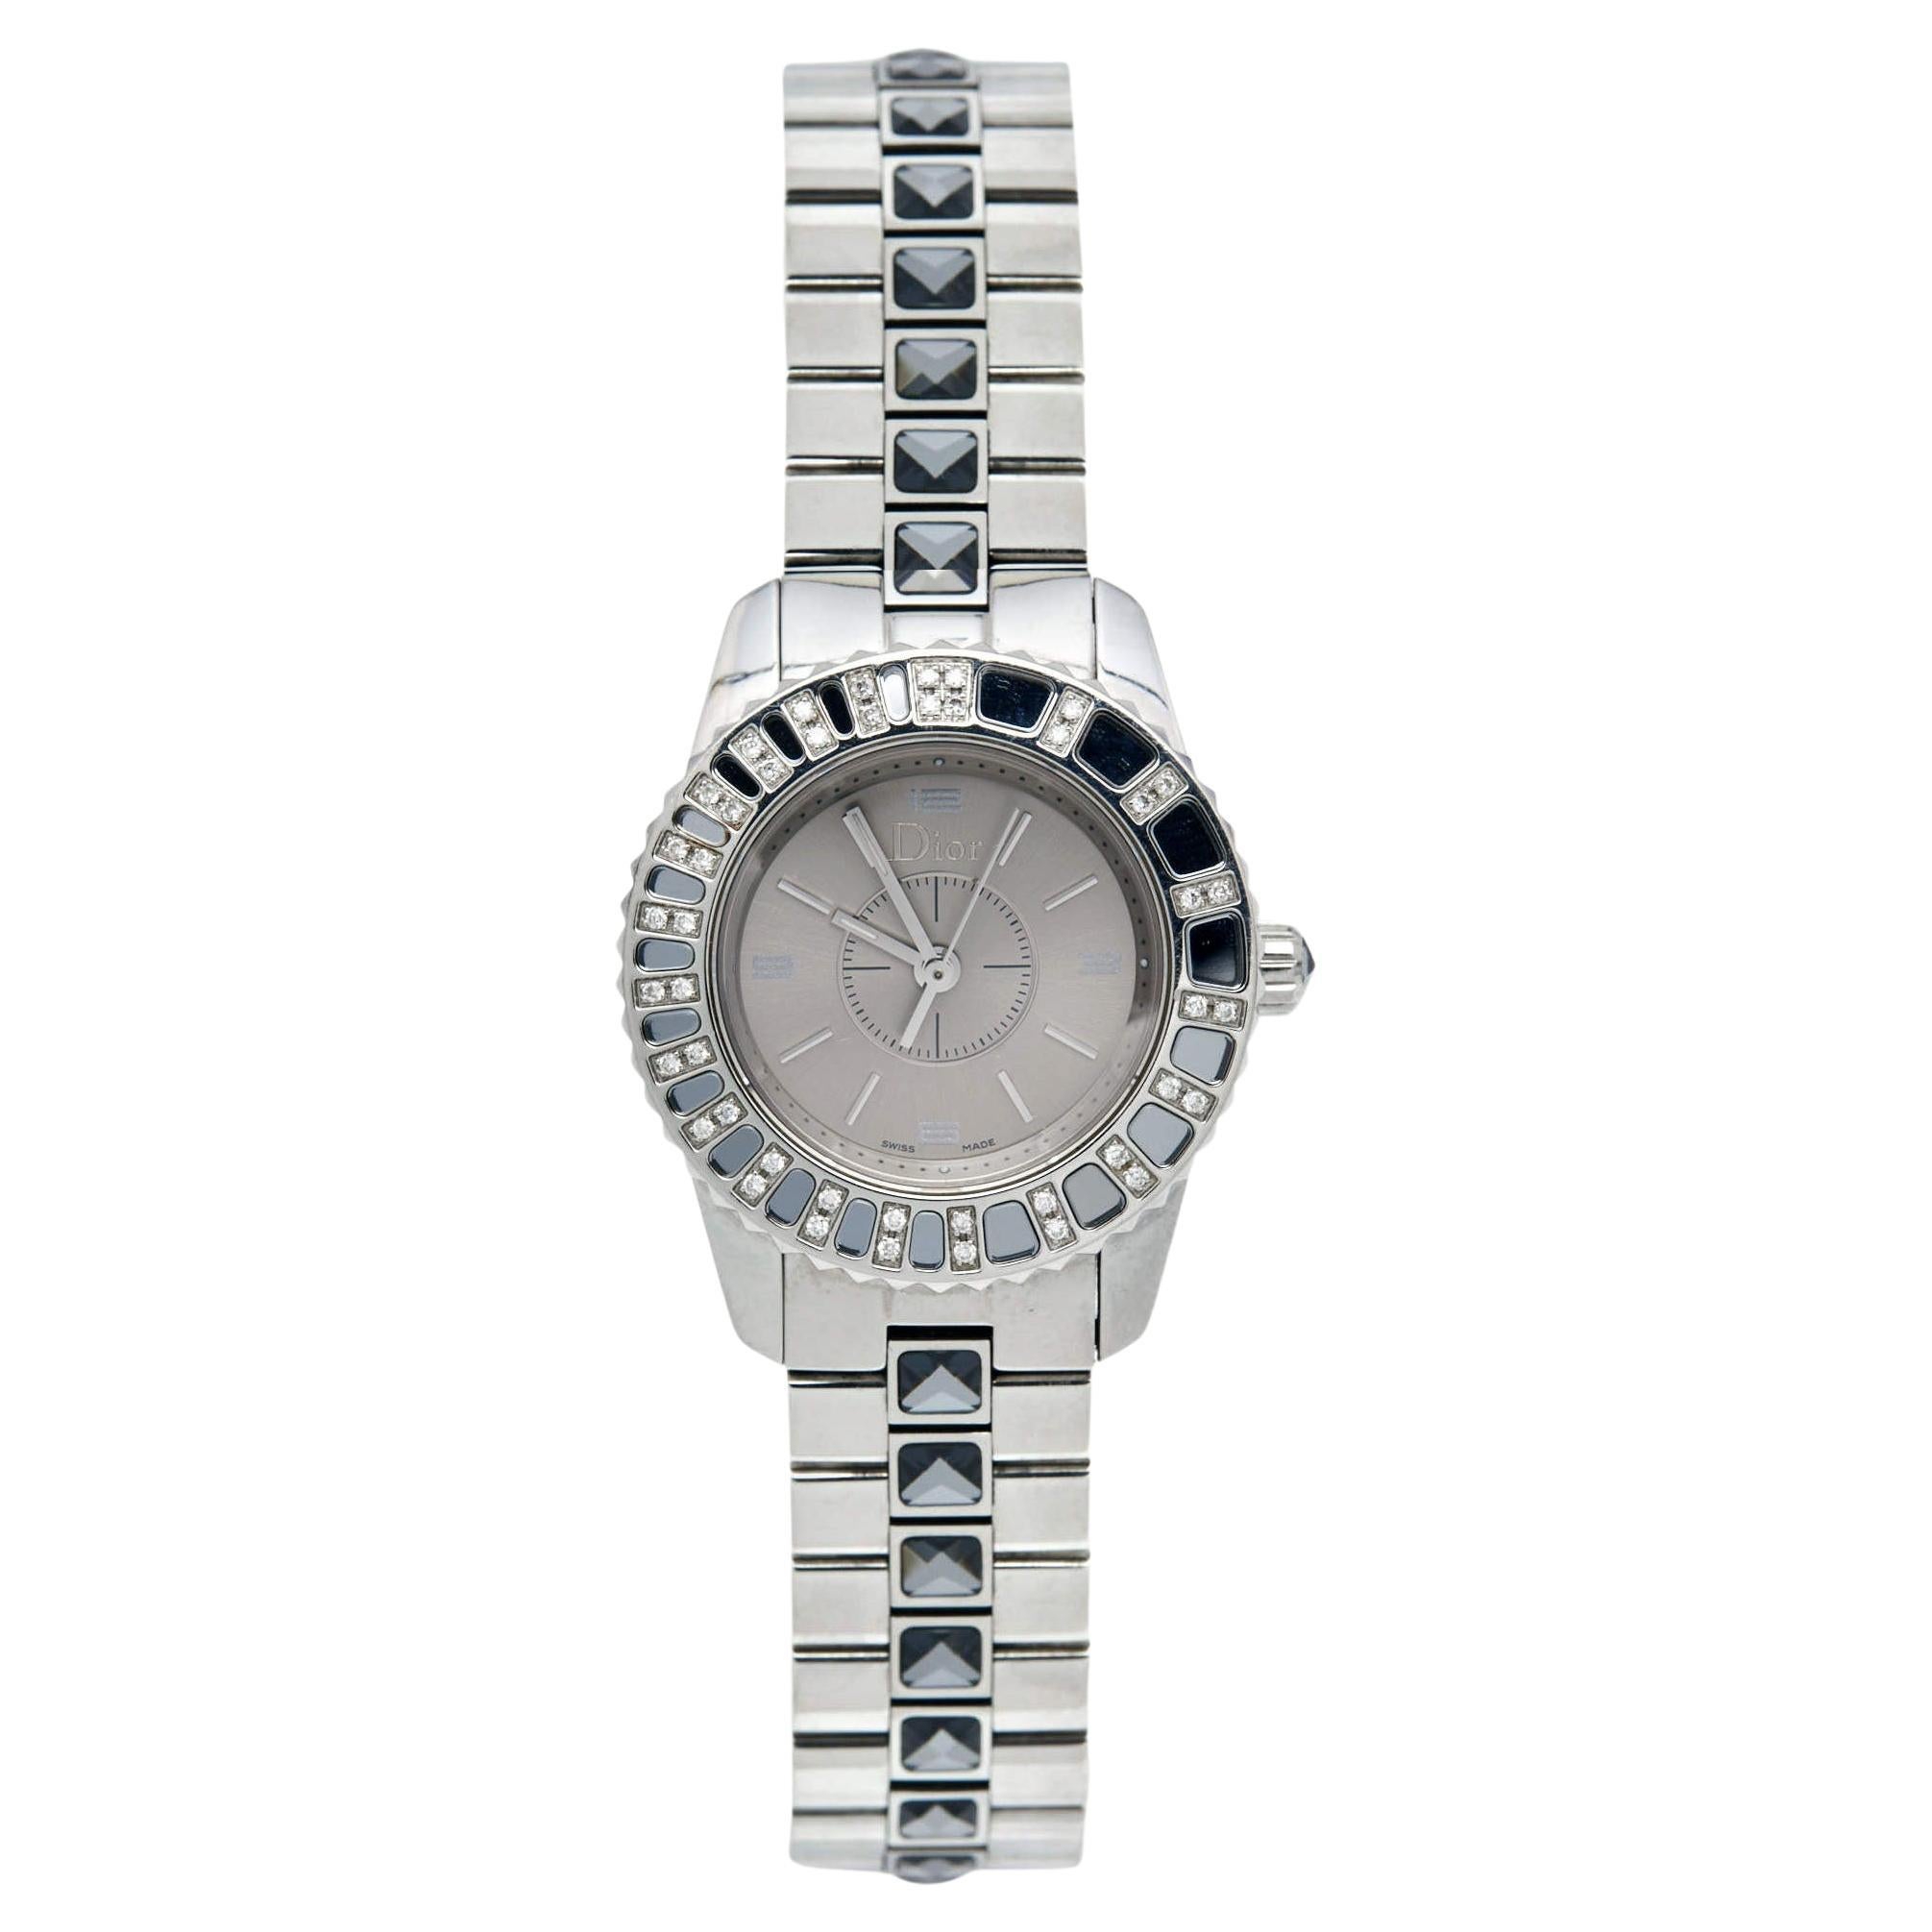 Dior Grey Stainless Steel Christal CD112115M001 Women's Wristwatch 29 mm